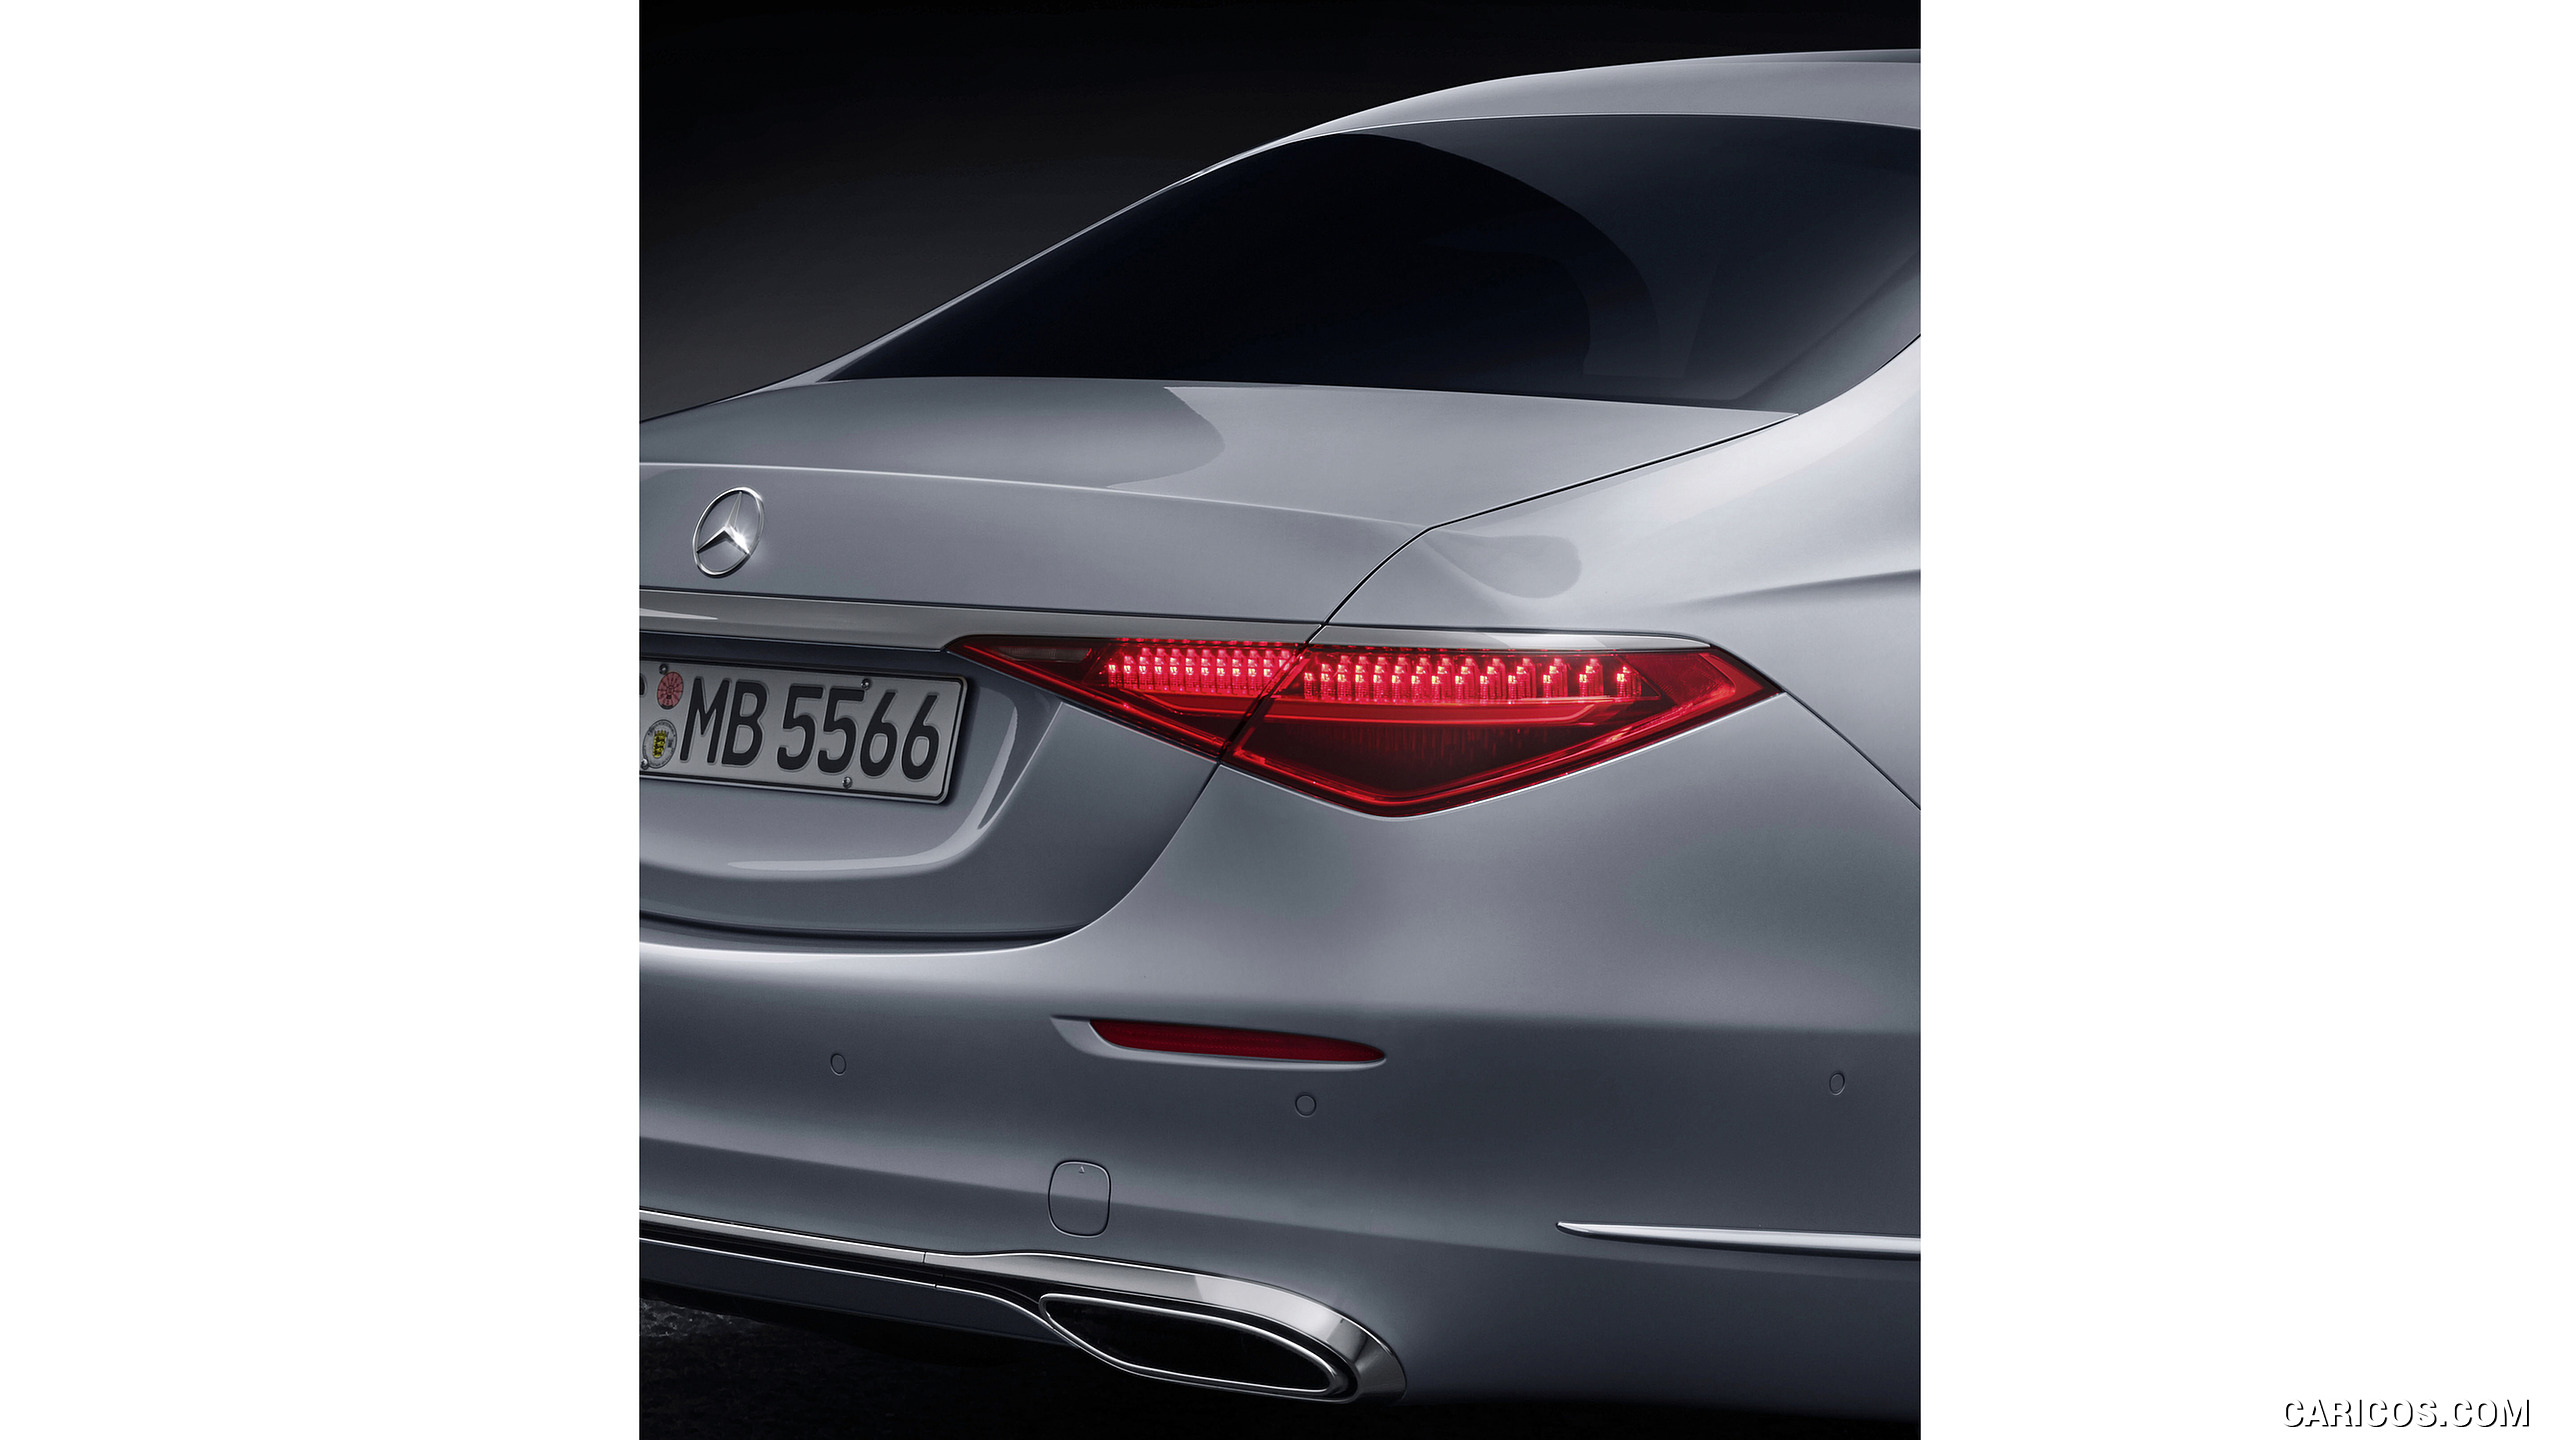 2021 Mercedes-Benz S-Class (Color: High-tech Silver) - Tail Light, #92 of 316